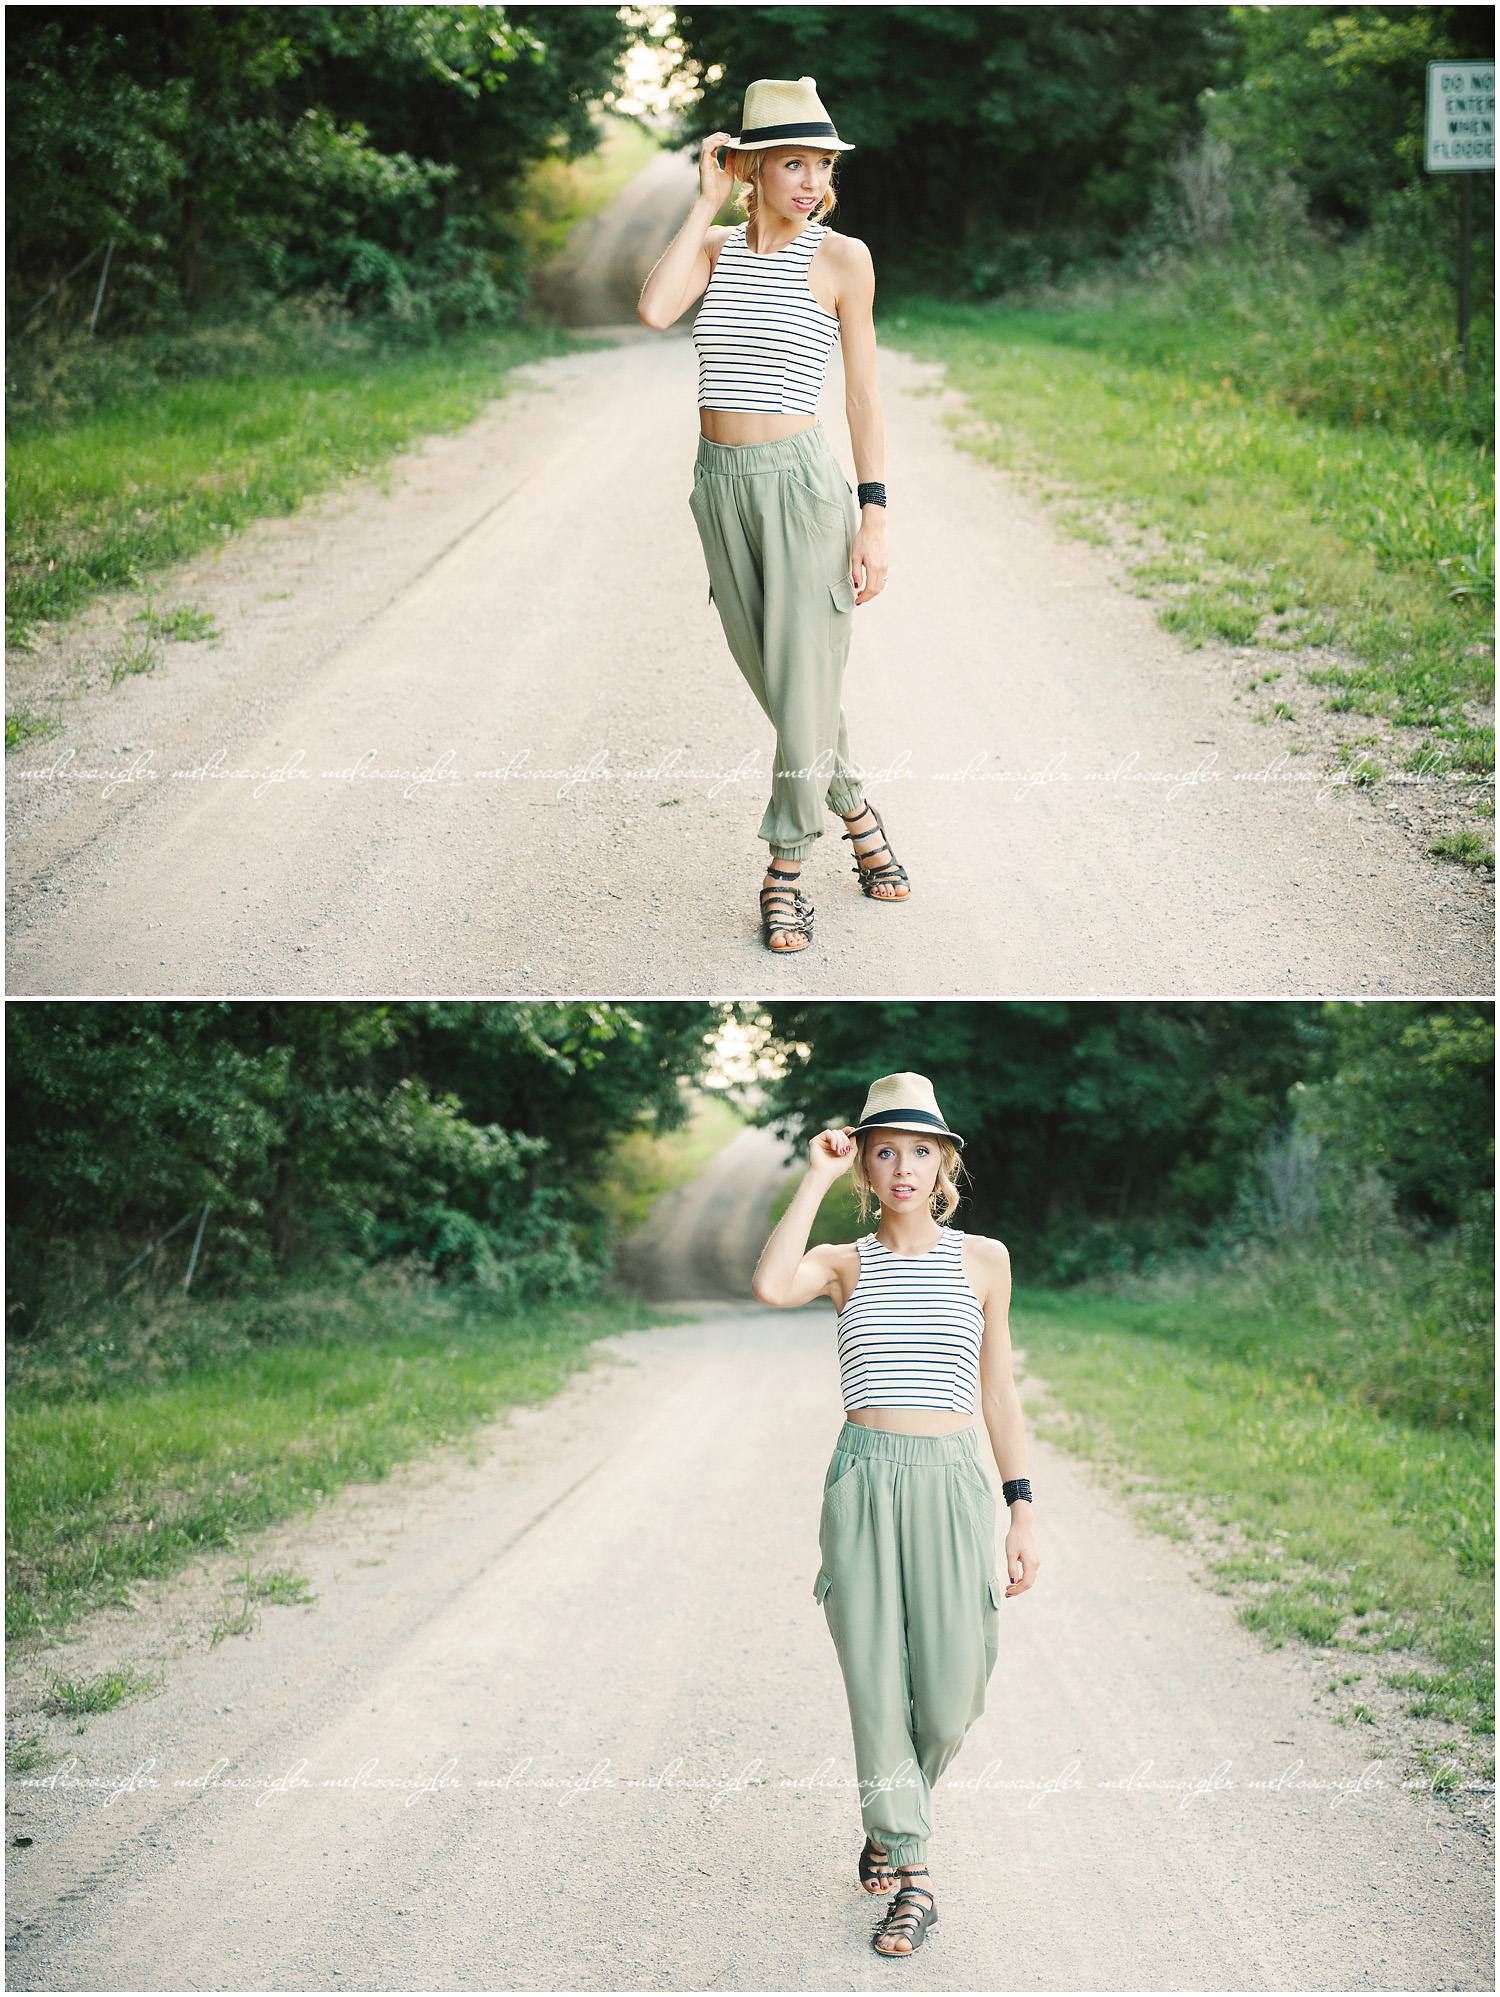 Model Headshots-Boho Fashion-Natural Light-Fashion Photography-Melissa Sigler Photography 2013